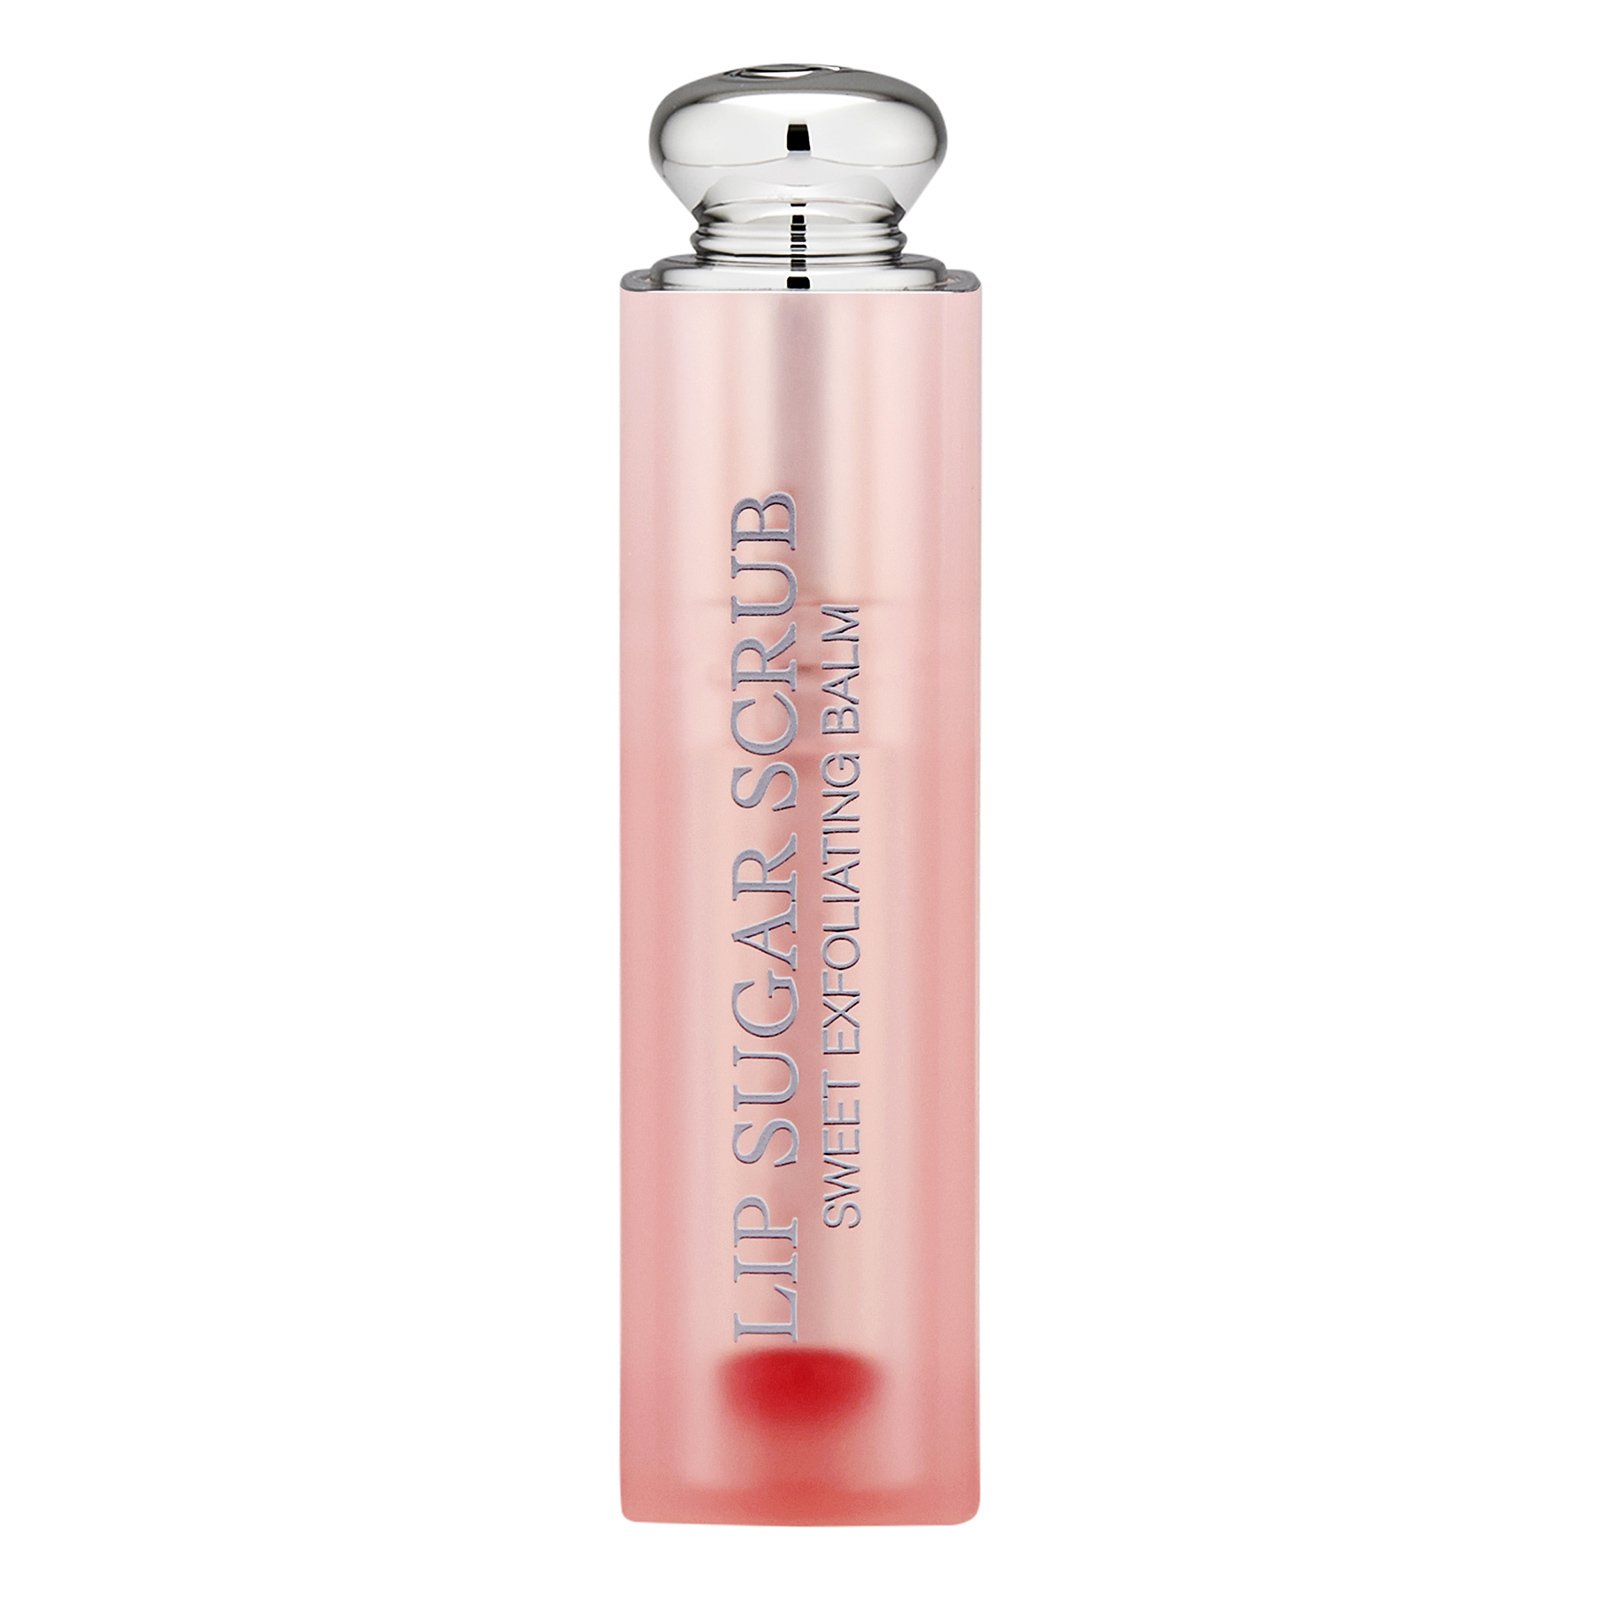 Dior Addict Lip Sugar Scrub Self-Vanishing Sweet Exfoliating Lip Balm Color Awakening